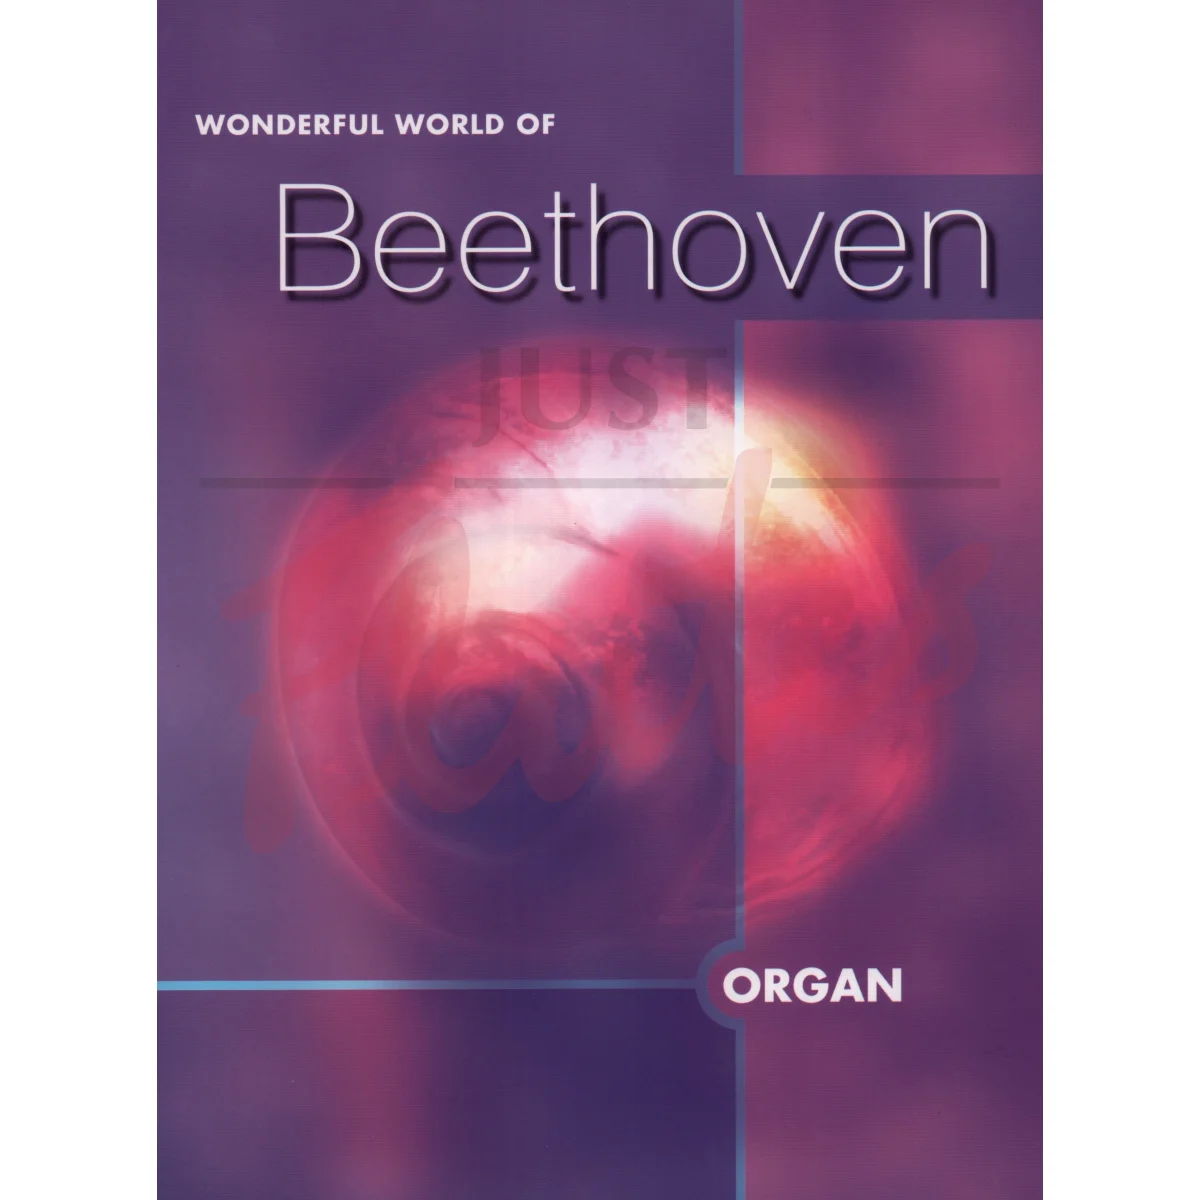 The Wonderful World of Beethoven [Organ]